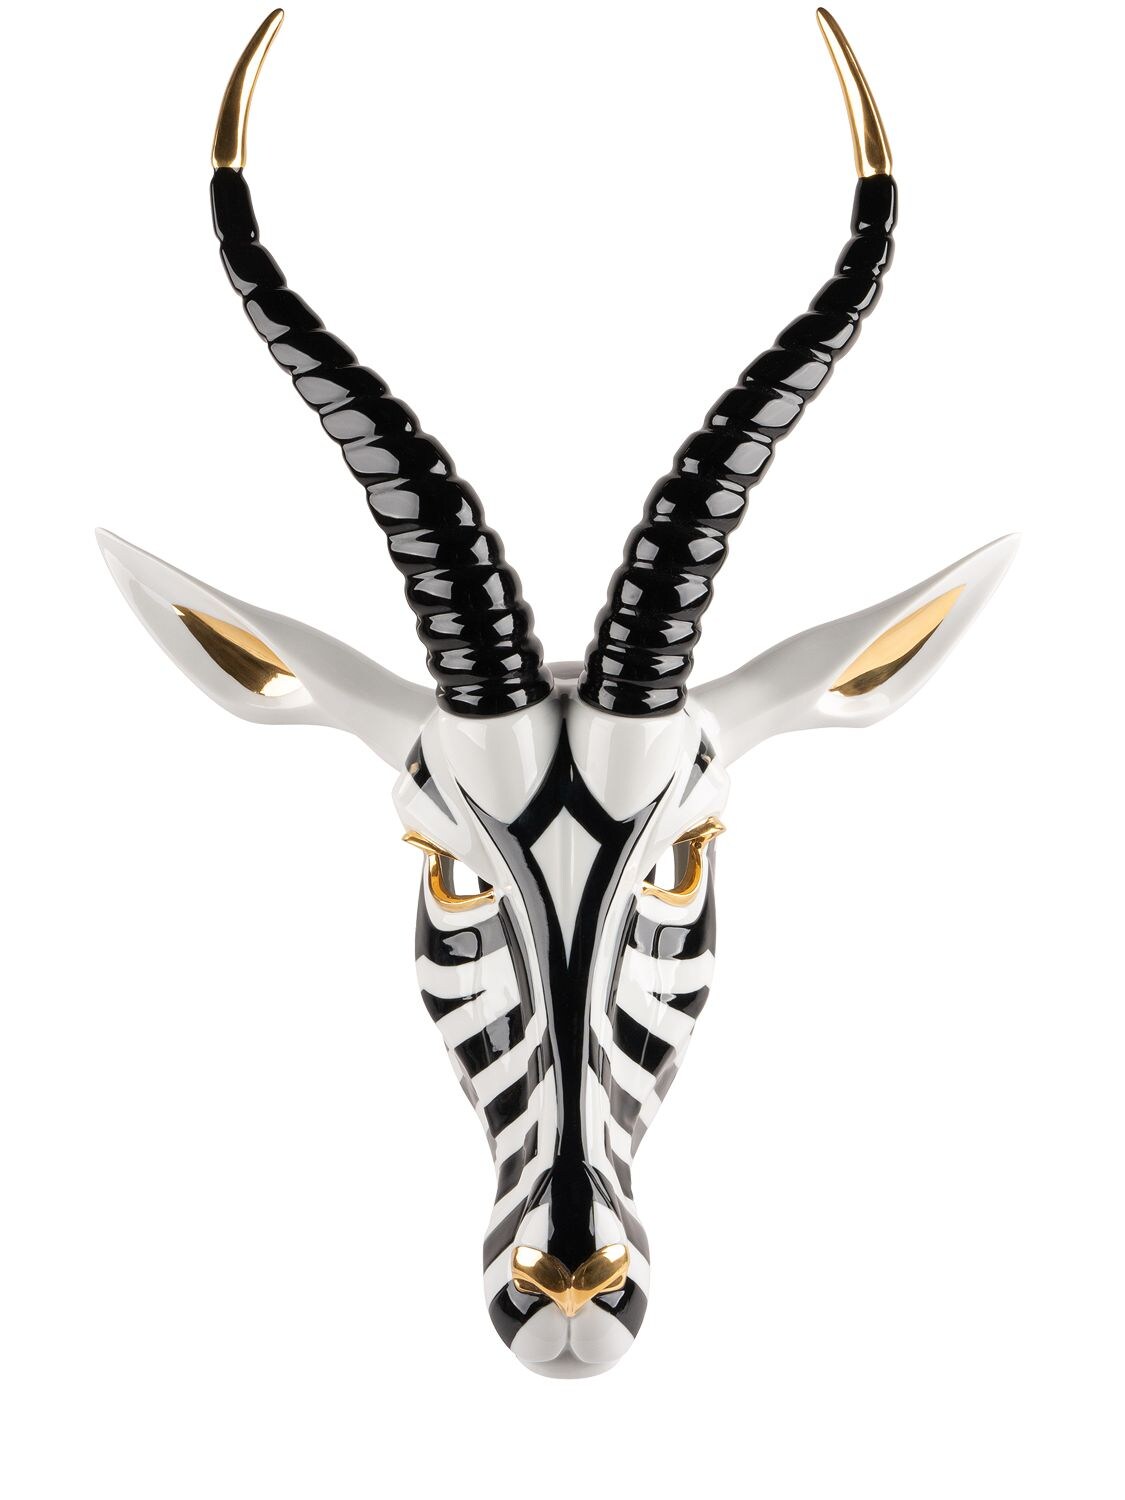 Antelope Mask インテリアオブジェクト